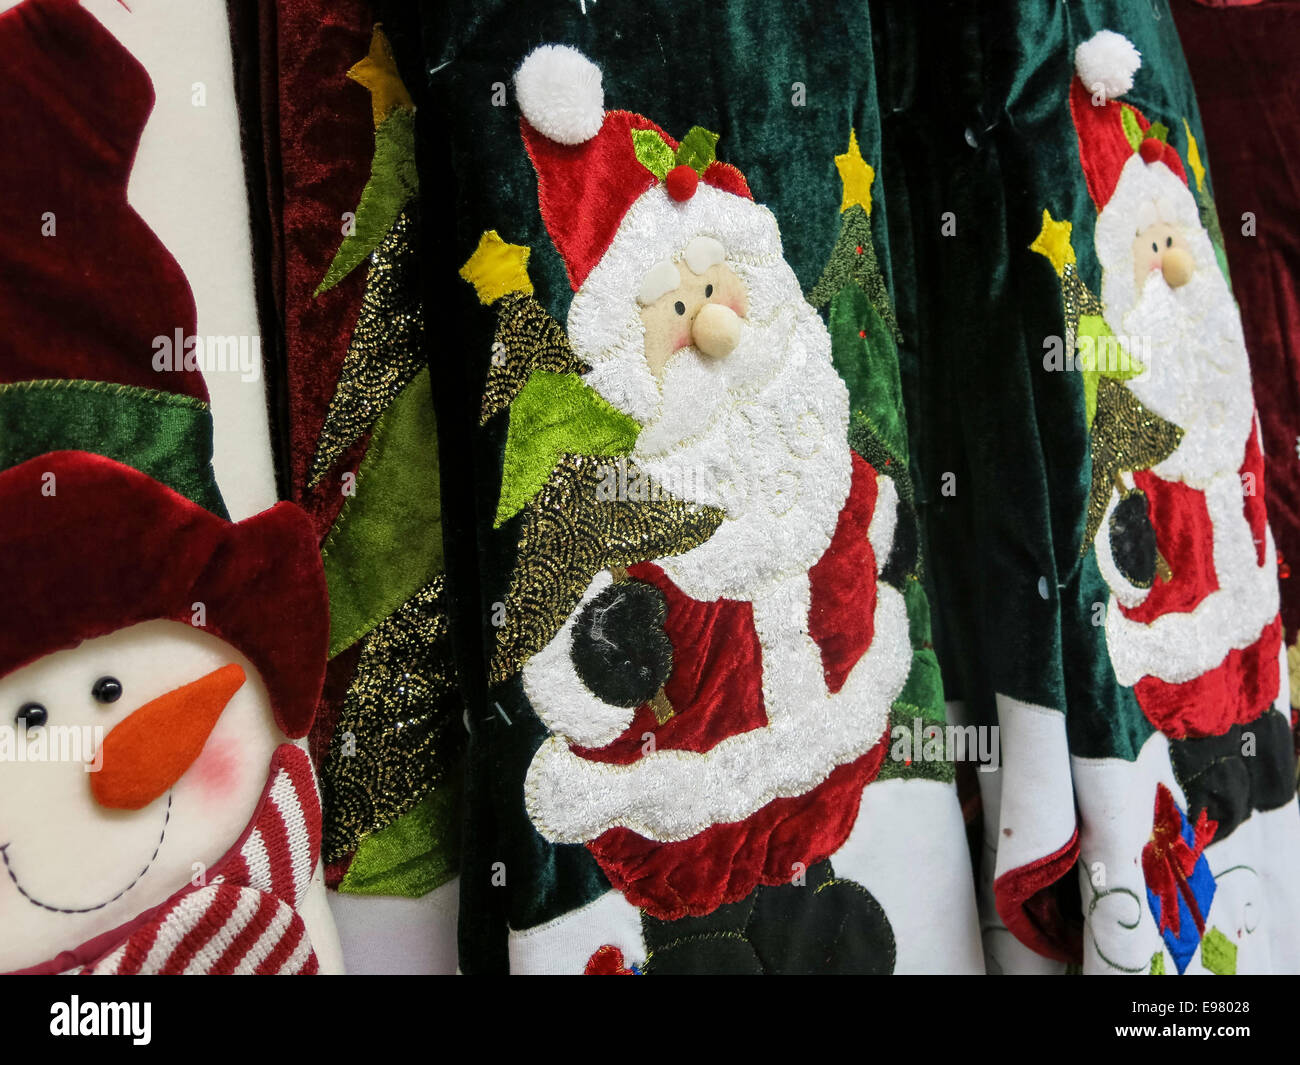 Kmart Store Display, NYC Stock Photo